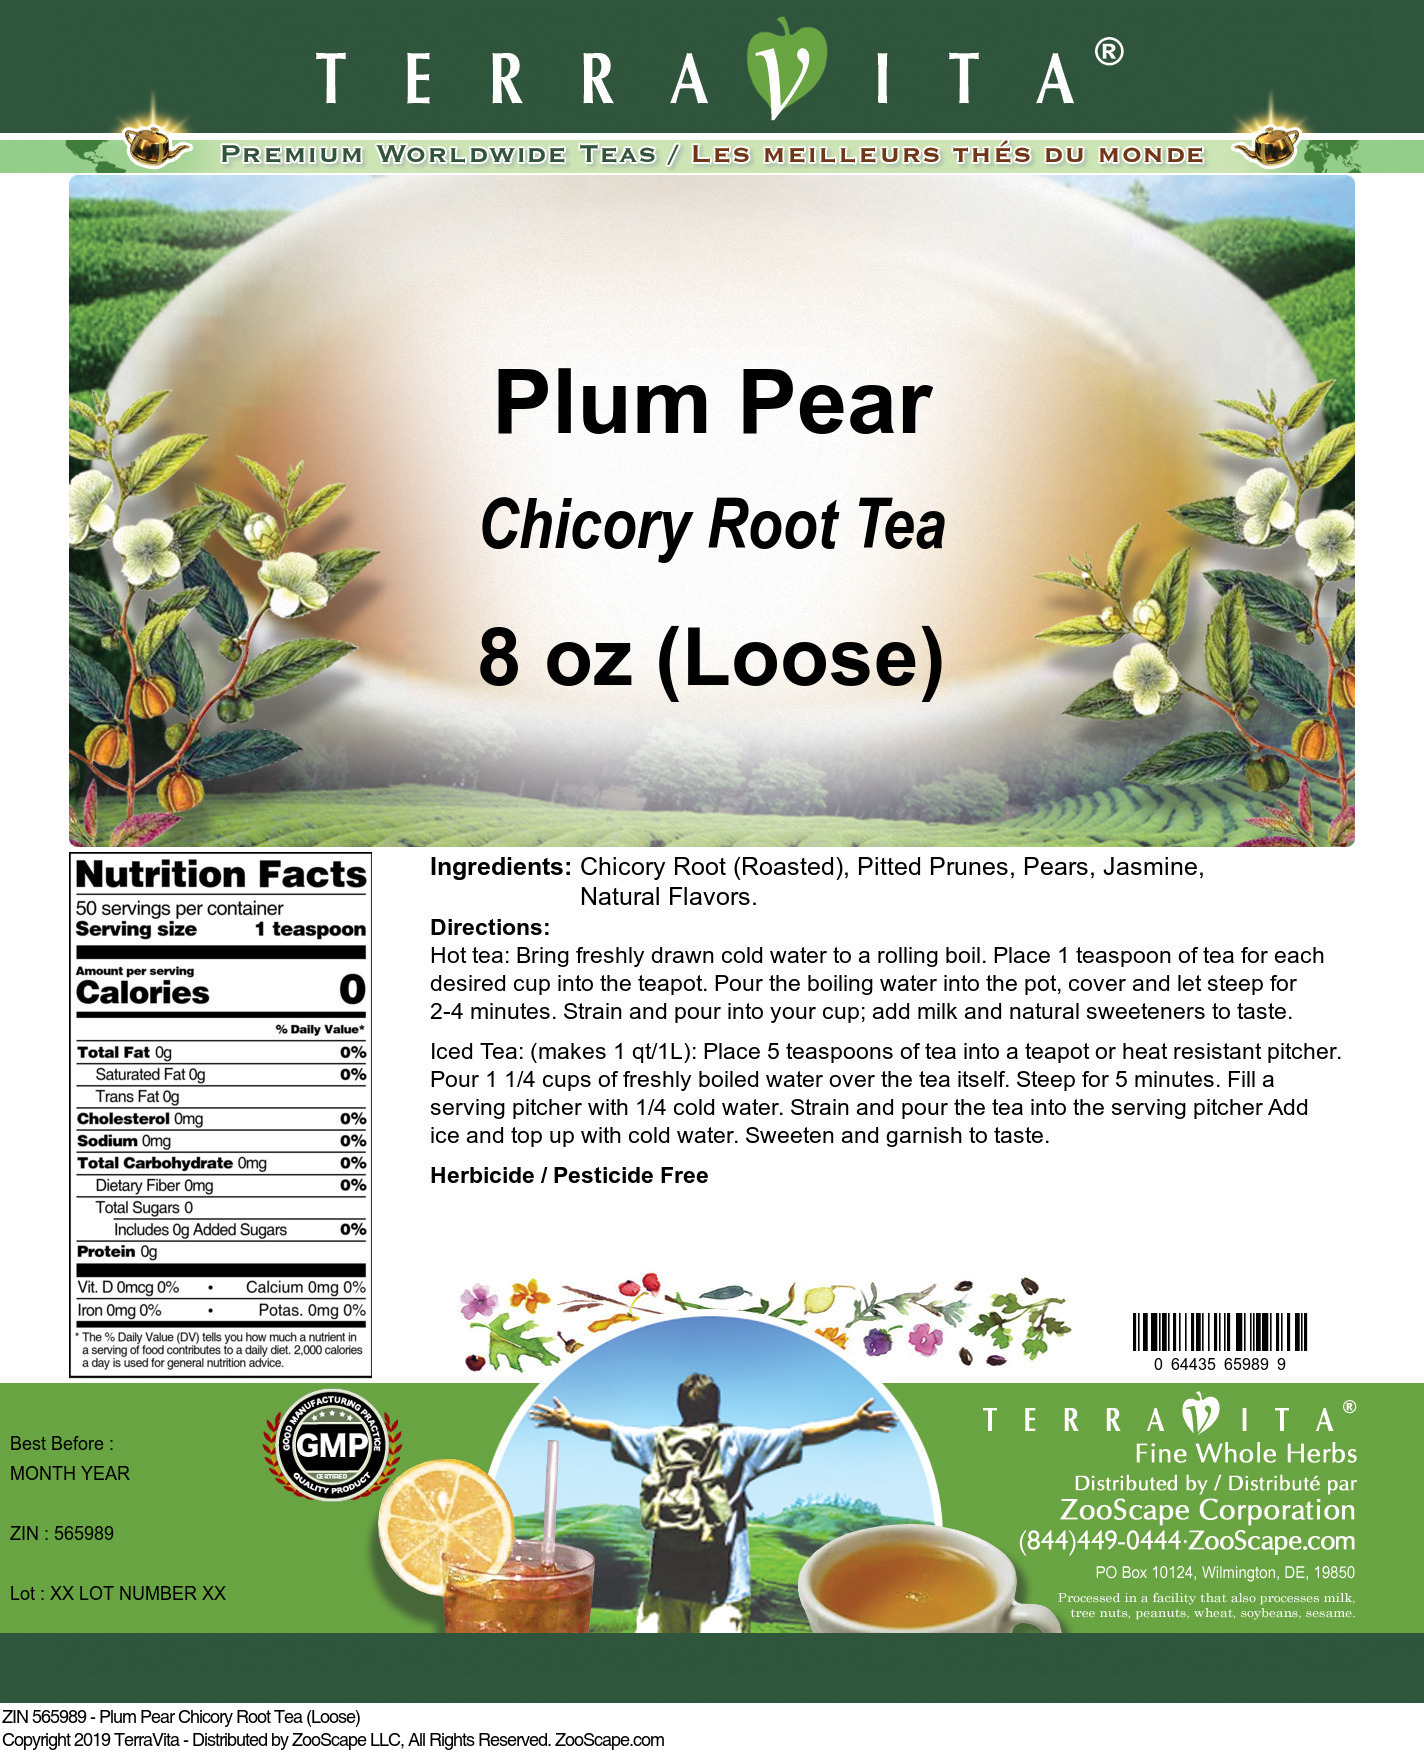 Plum Pear Chicory Root Tea (Loose) - Label